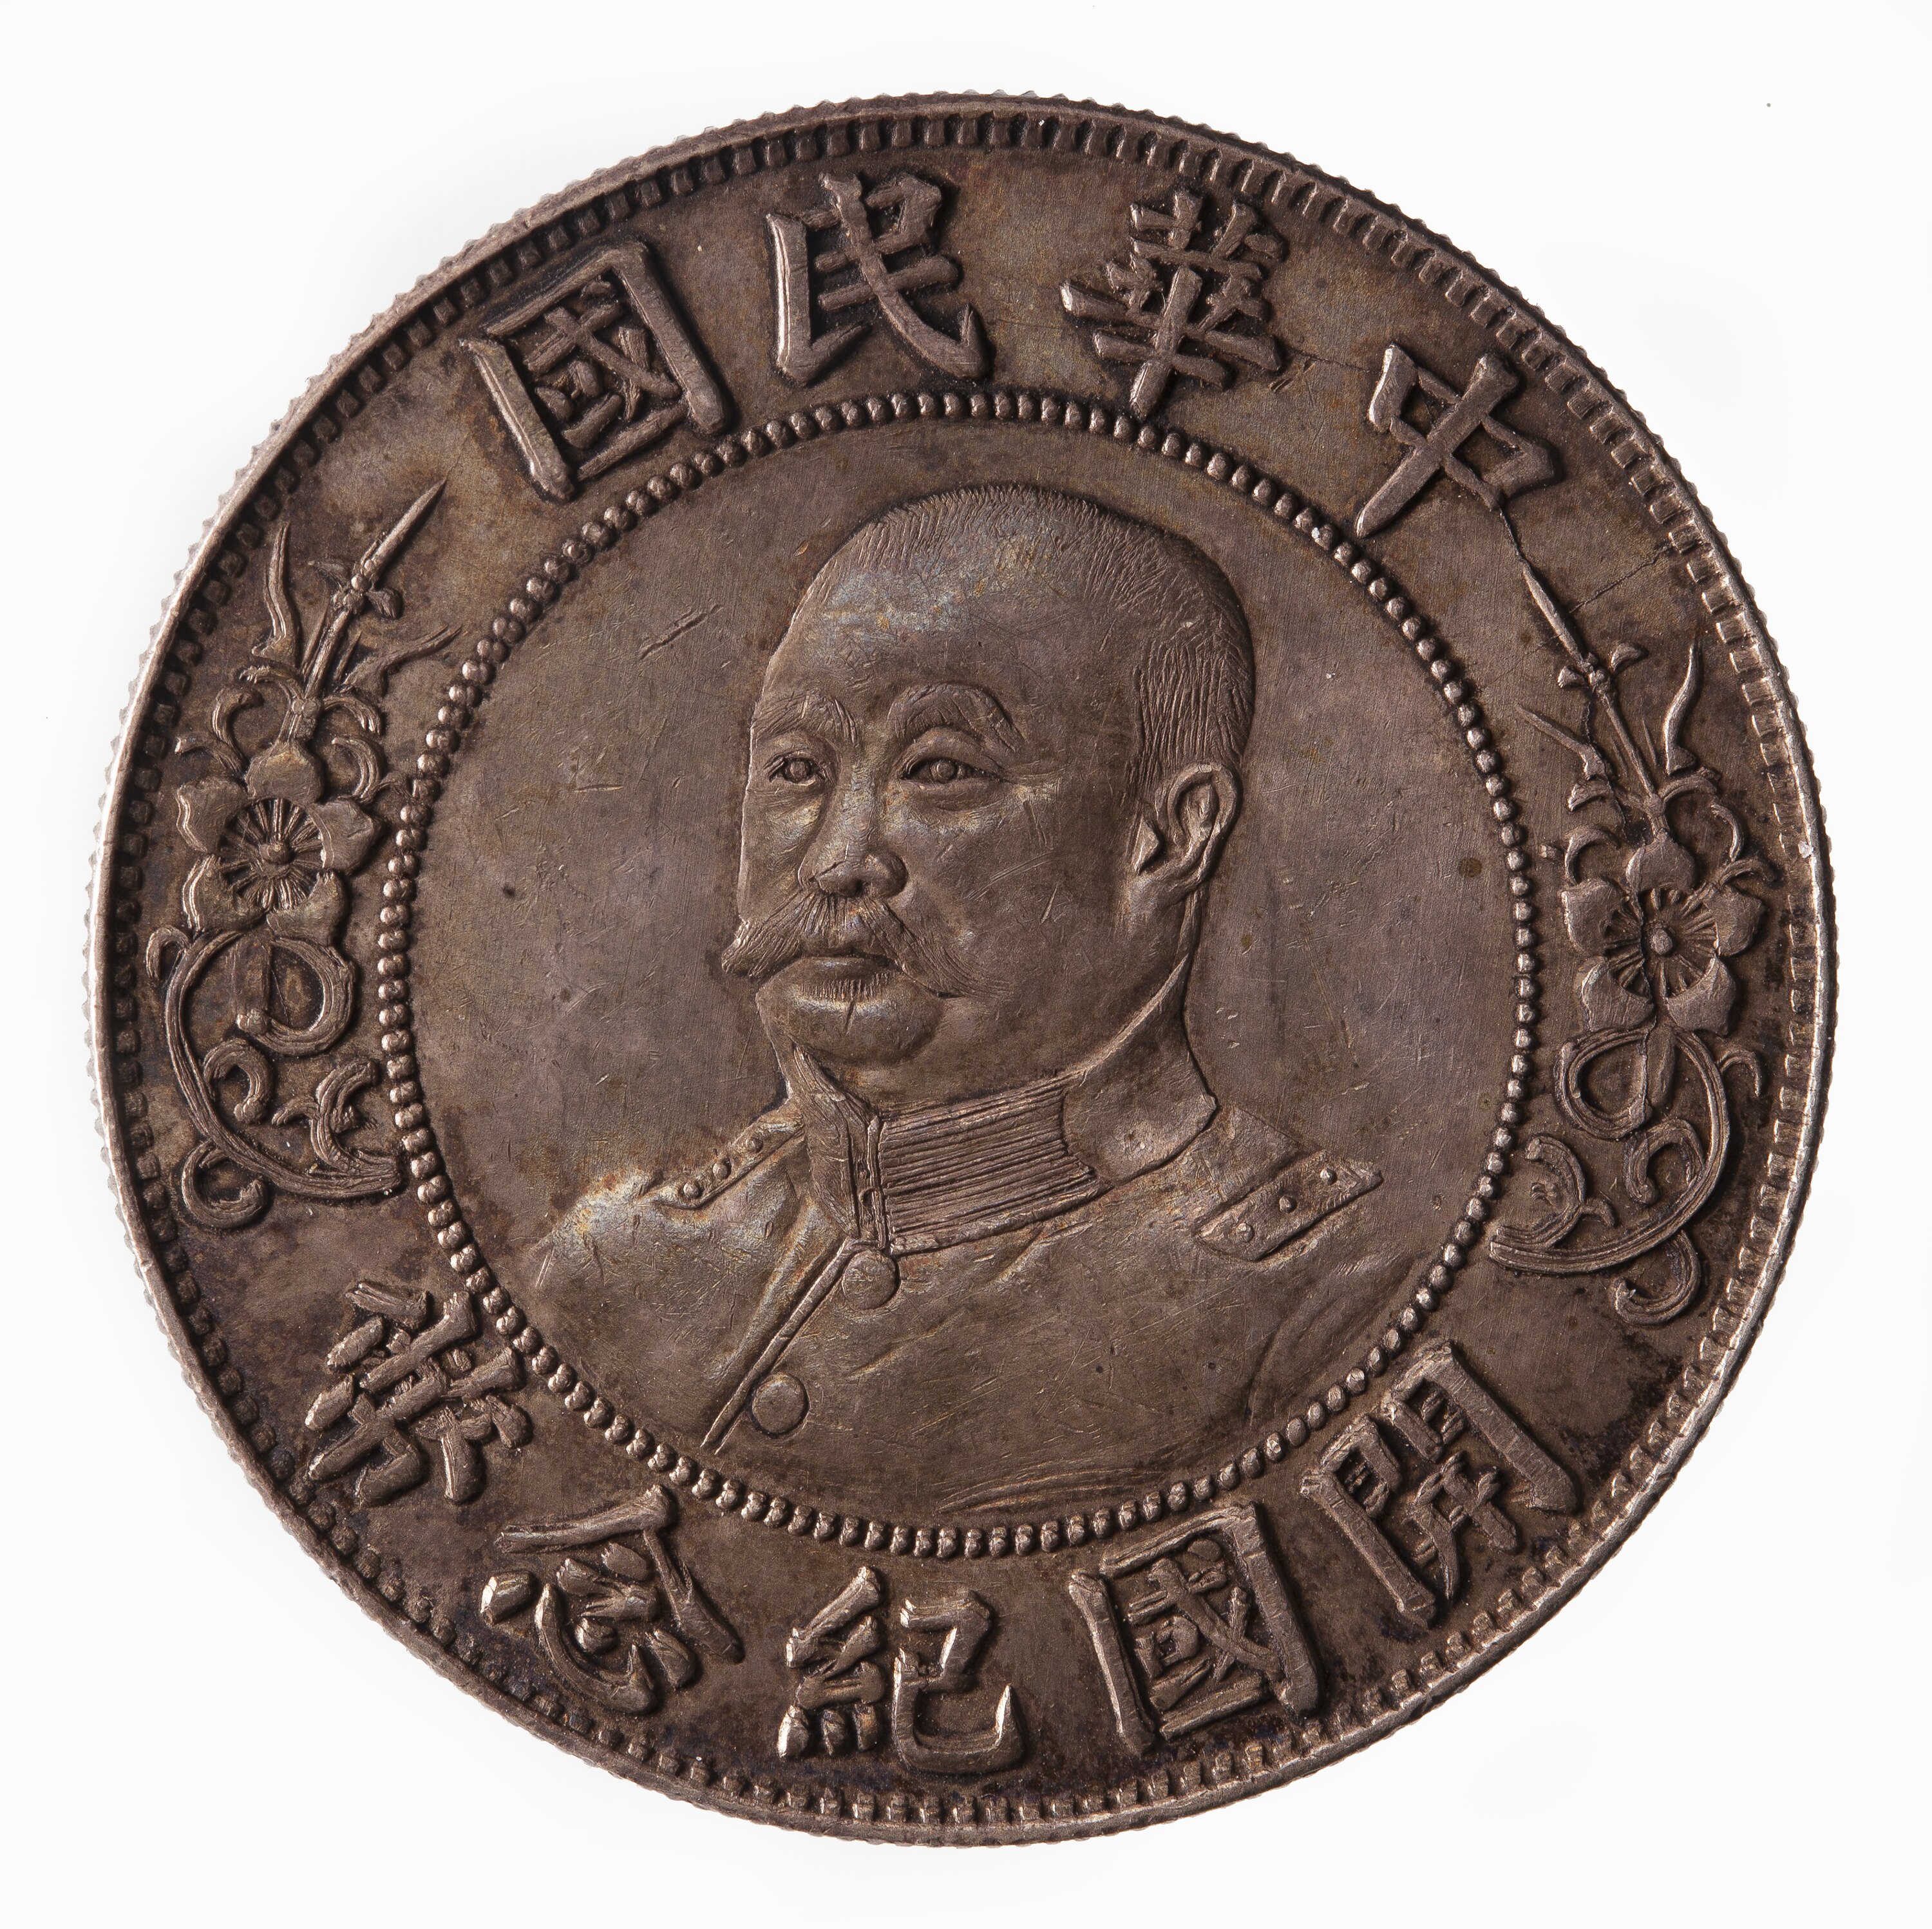 1916 Chinese Silver Dollar $1,Li yuan hong Commemorative coin,100% Silver 